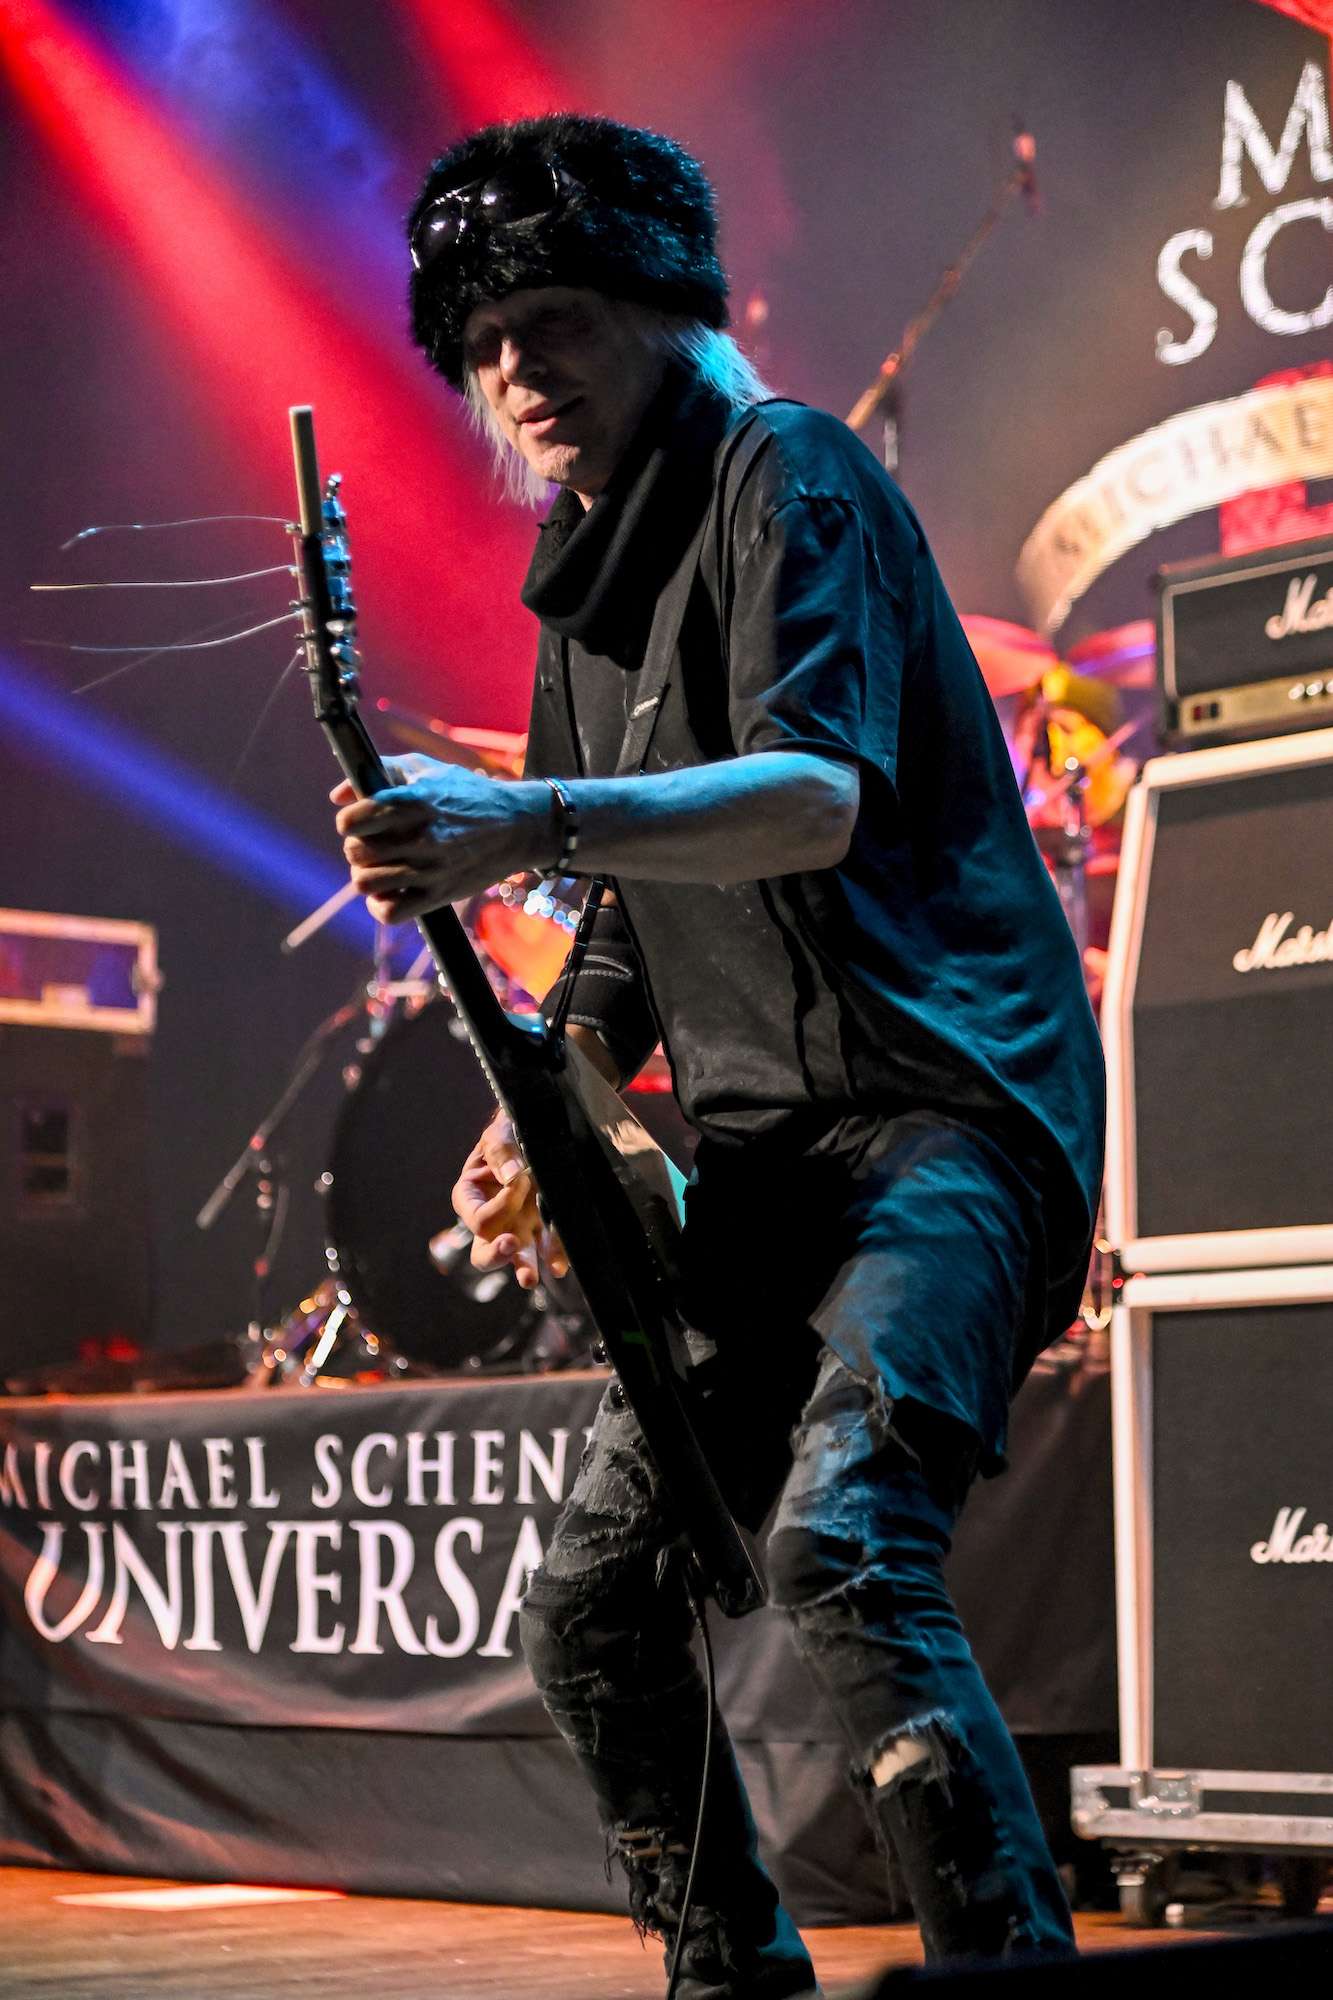 Michael Schenker Live at the Arcada [GALLERY] 4